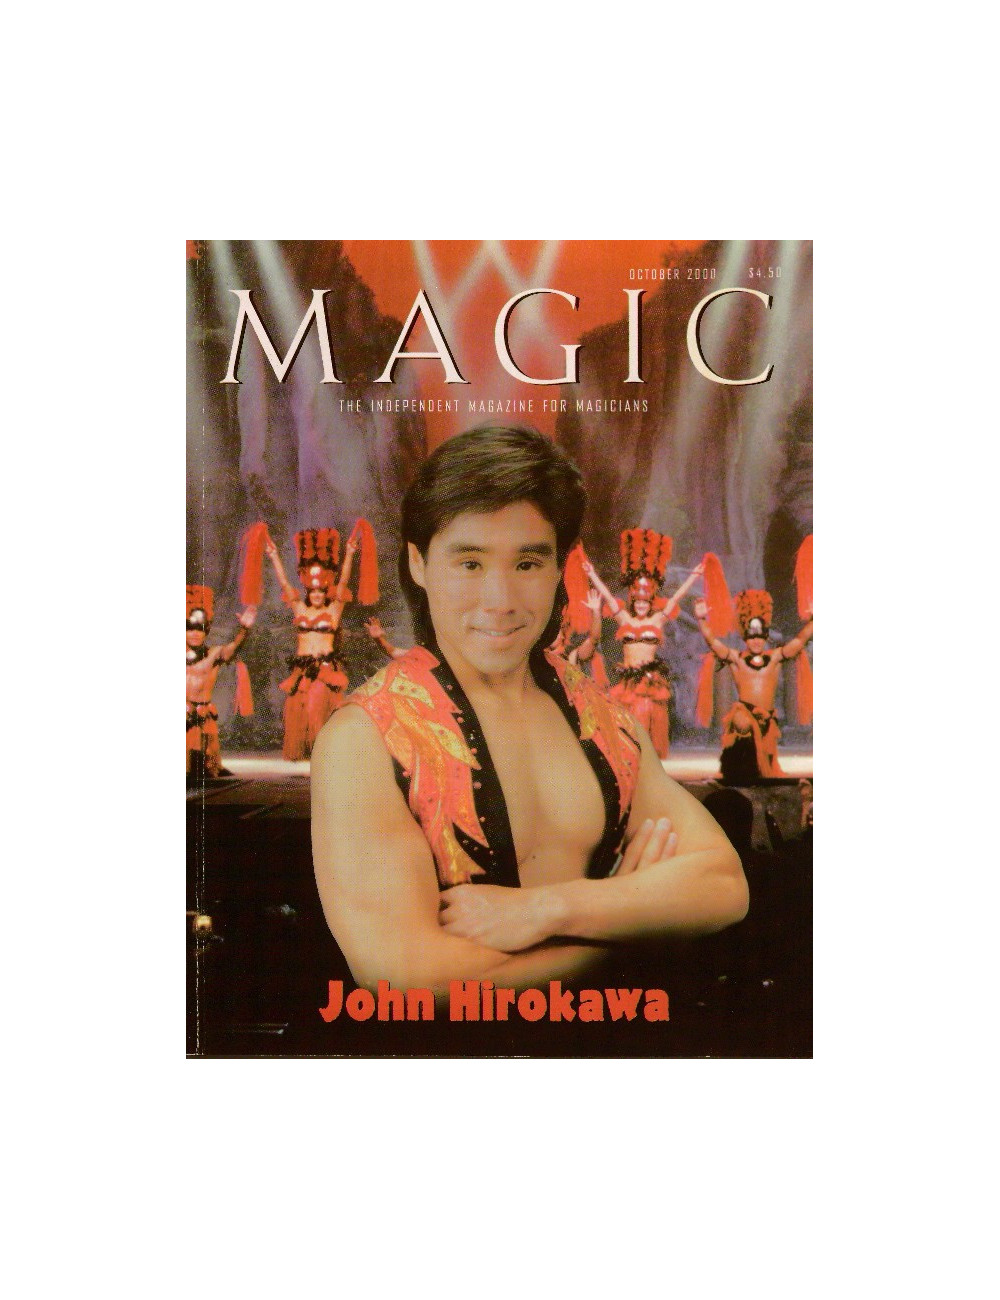 MAGIC MAGAZINE OCTOBRE 2000